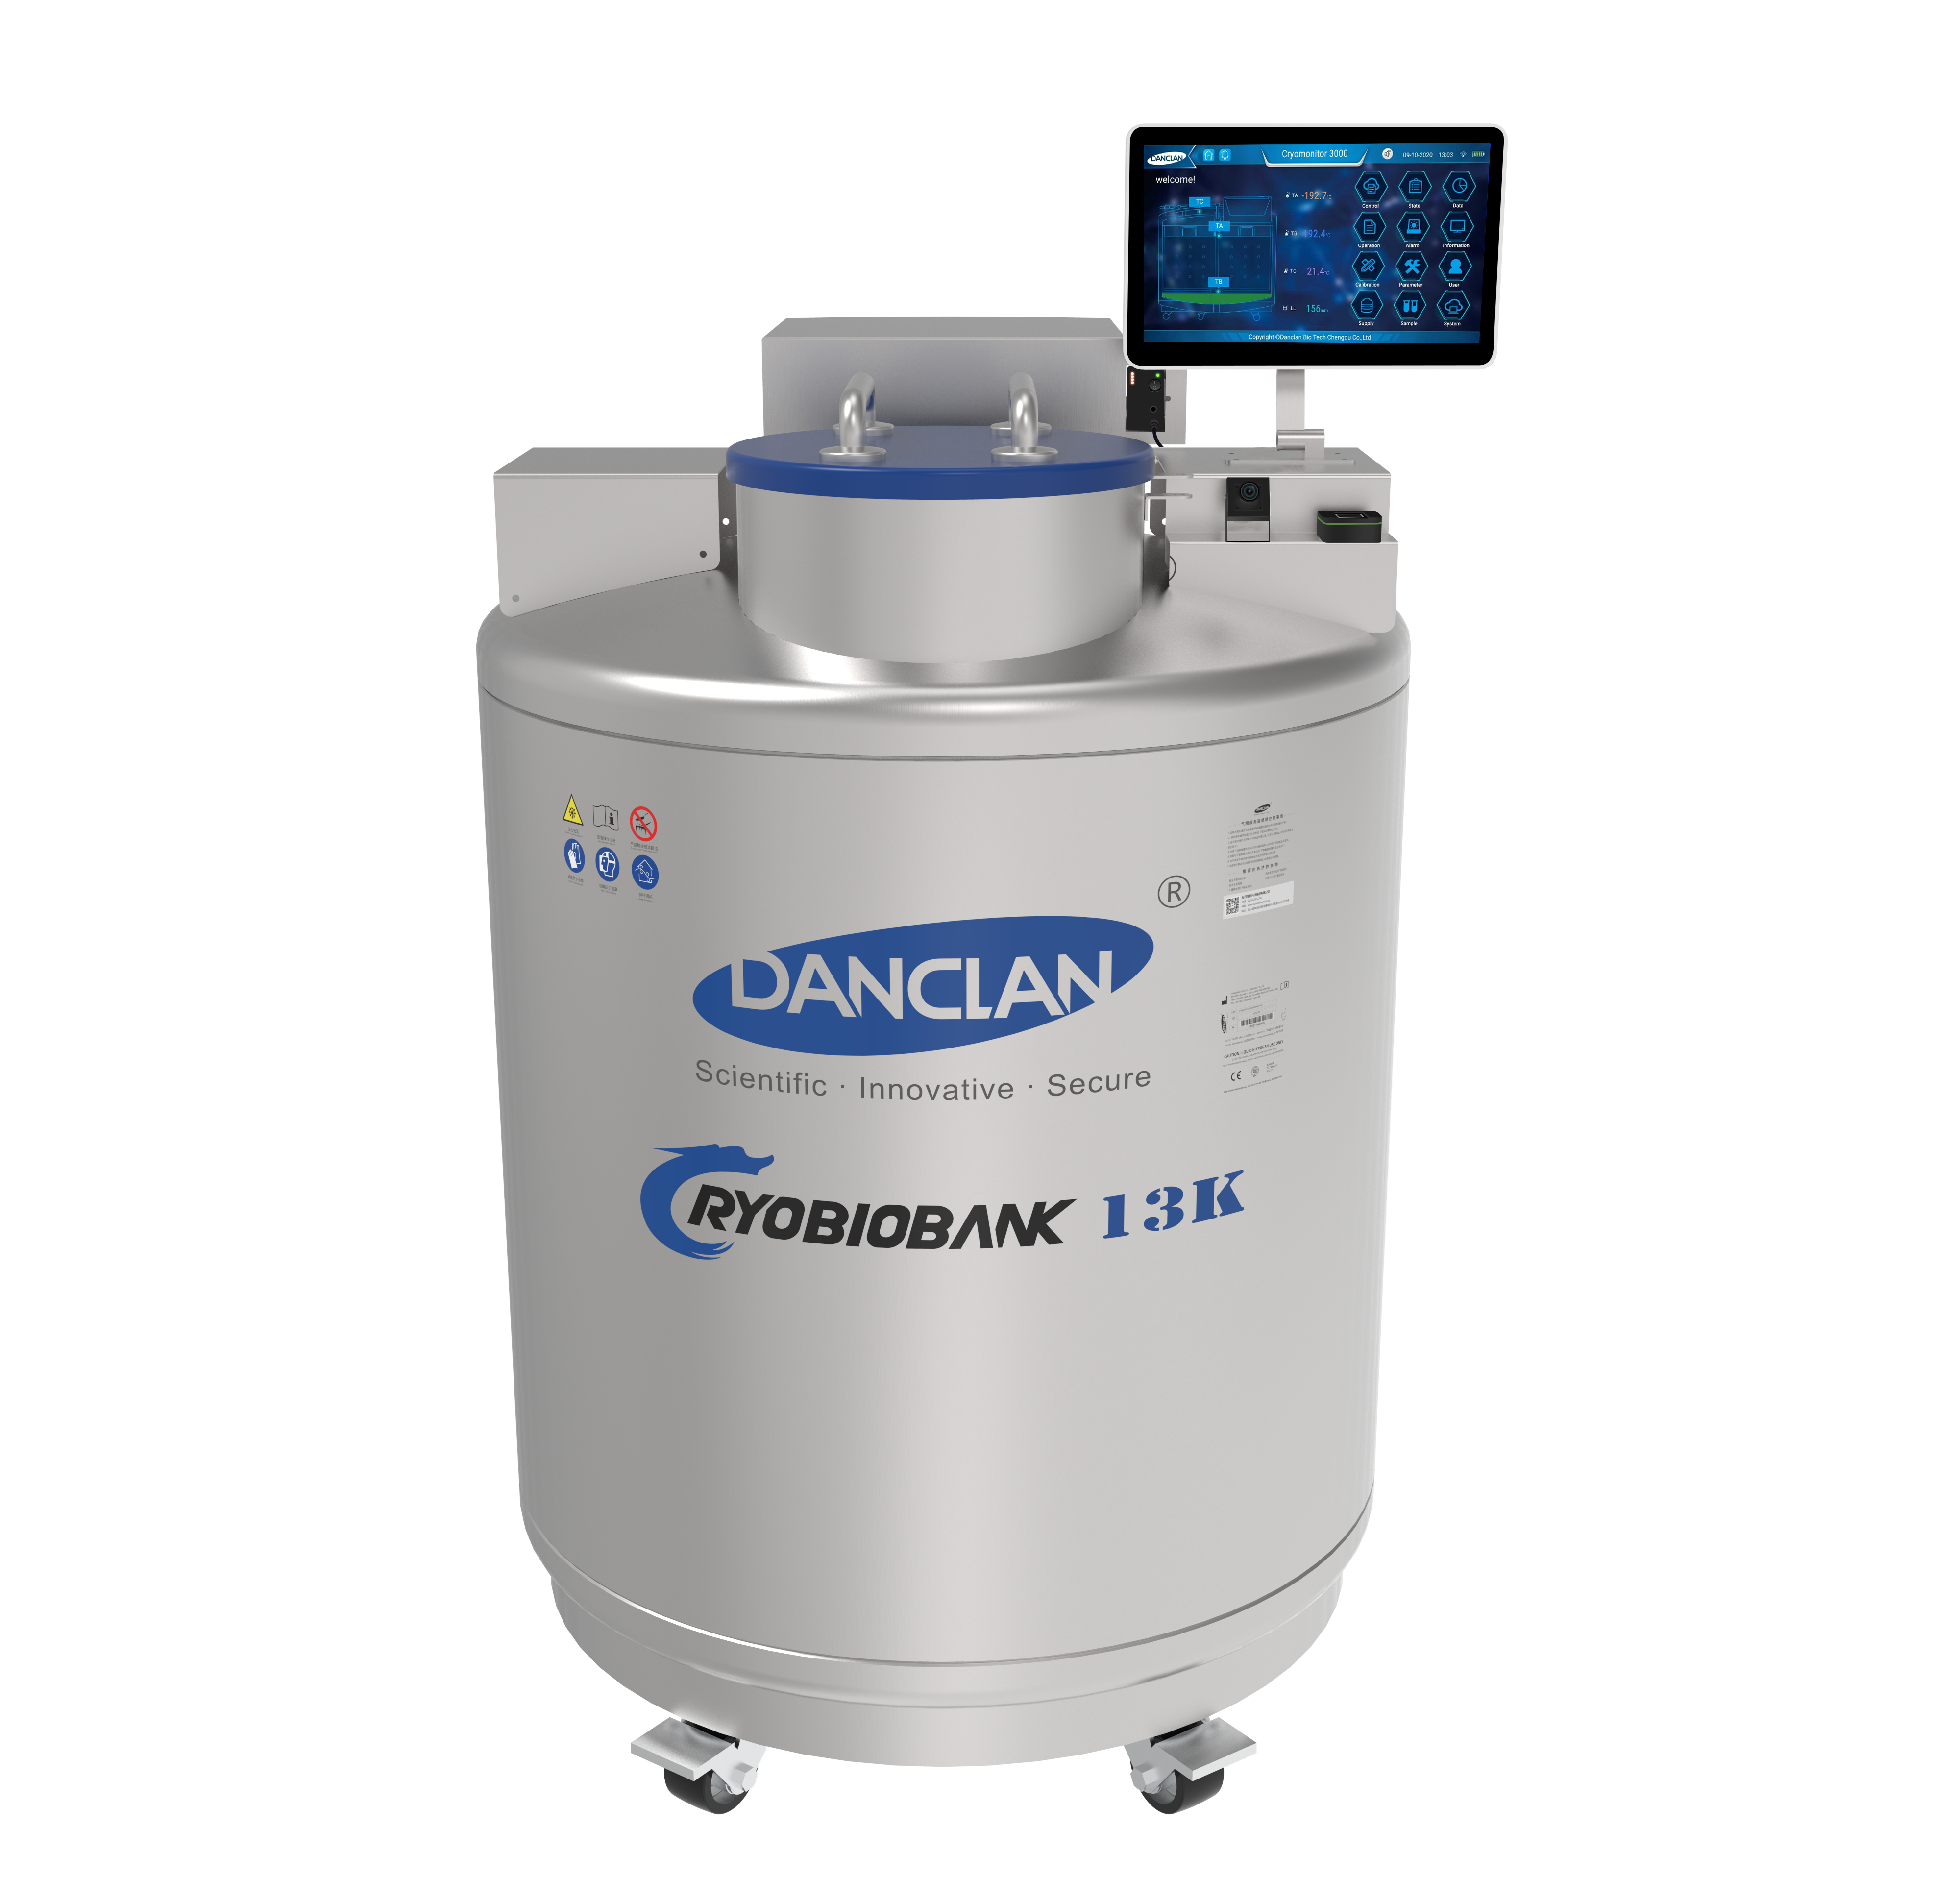 Cryobiobank 13K- Vapor phase liquid nitrogen tank with large capacity